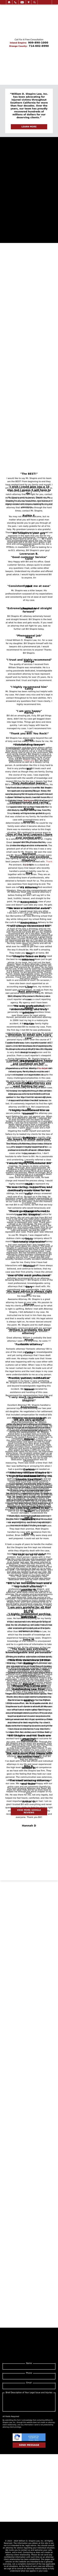 William D. Shapiro - San Bernardino CA Lawyers